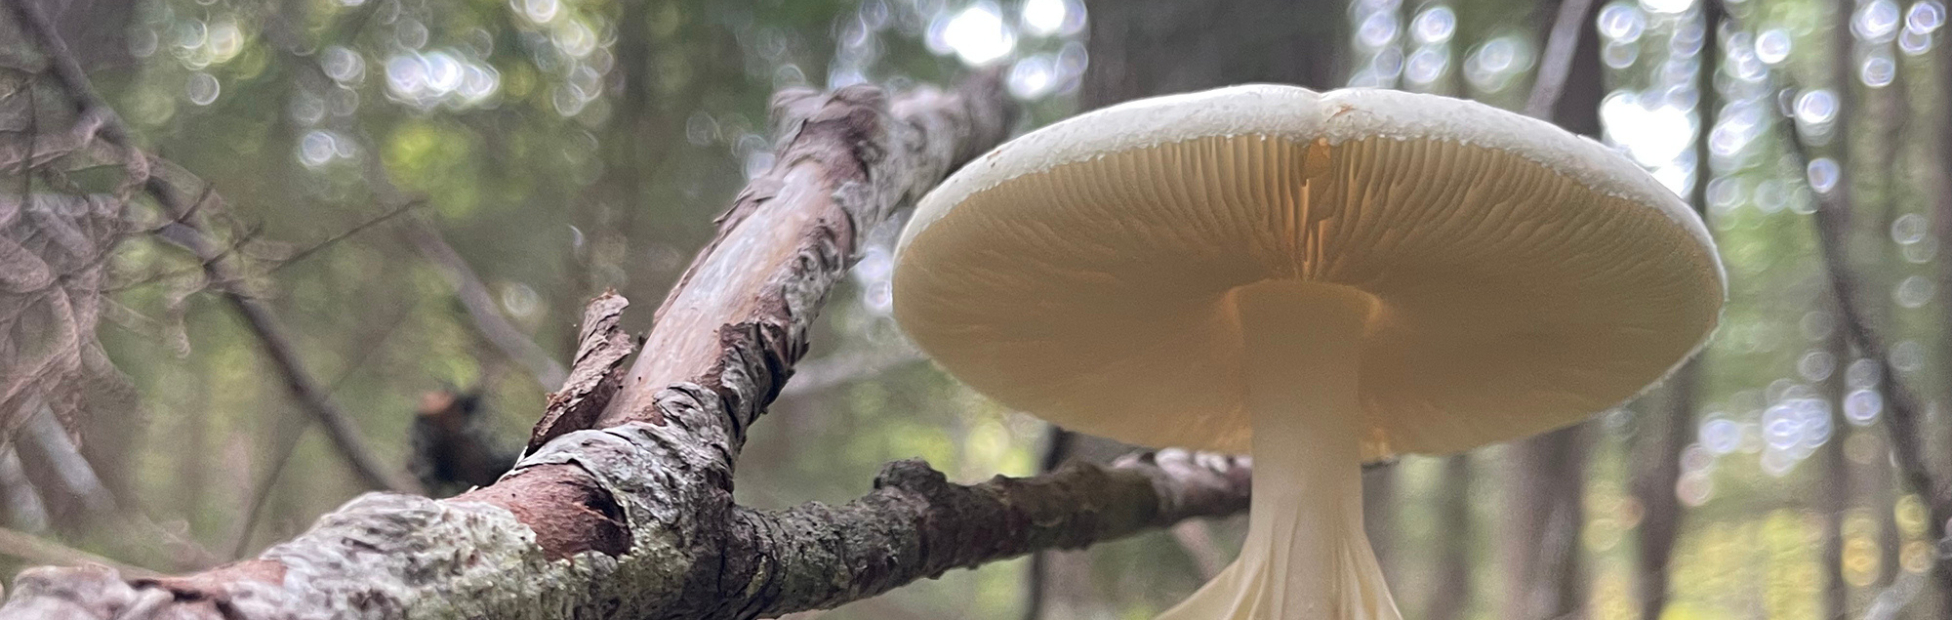 Image of wild mushroom in the woods